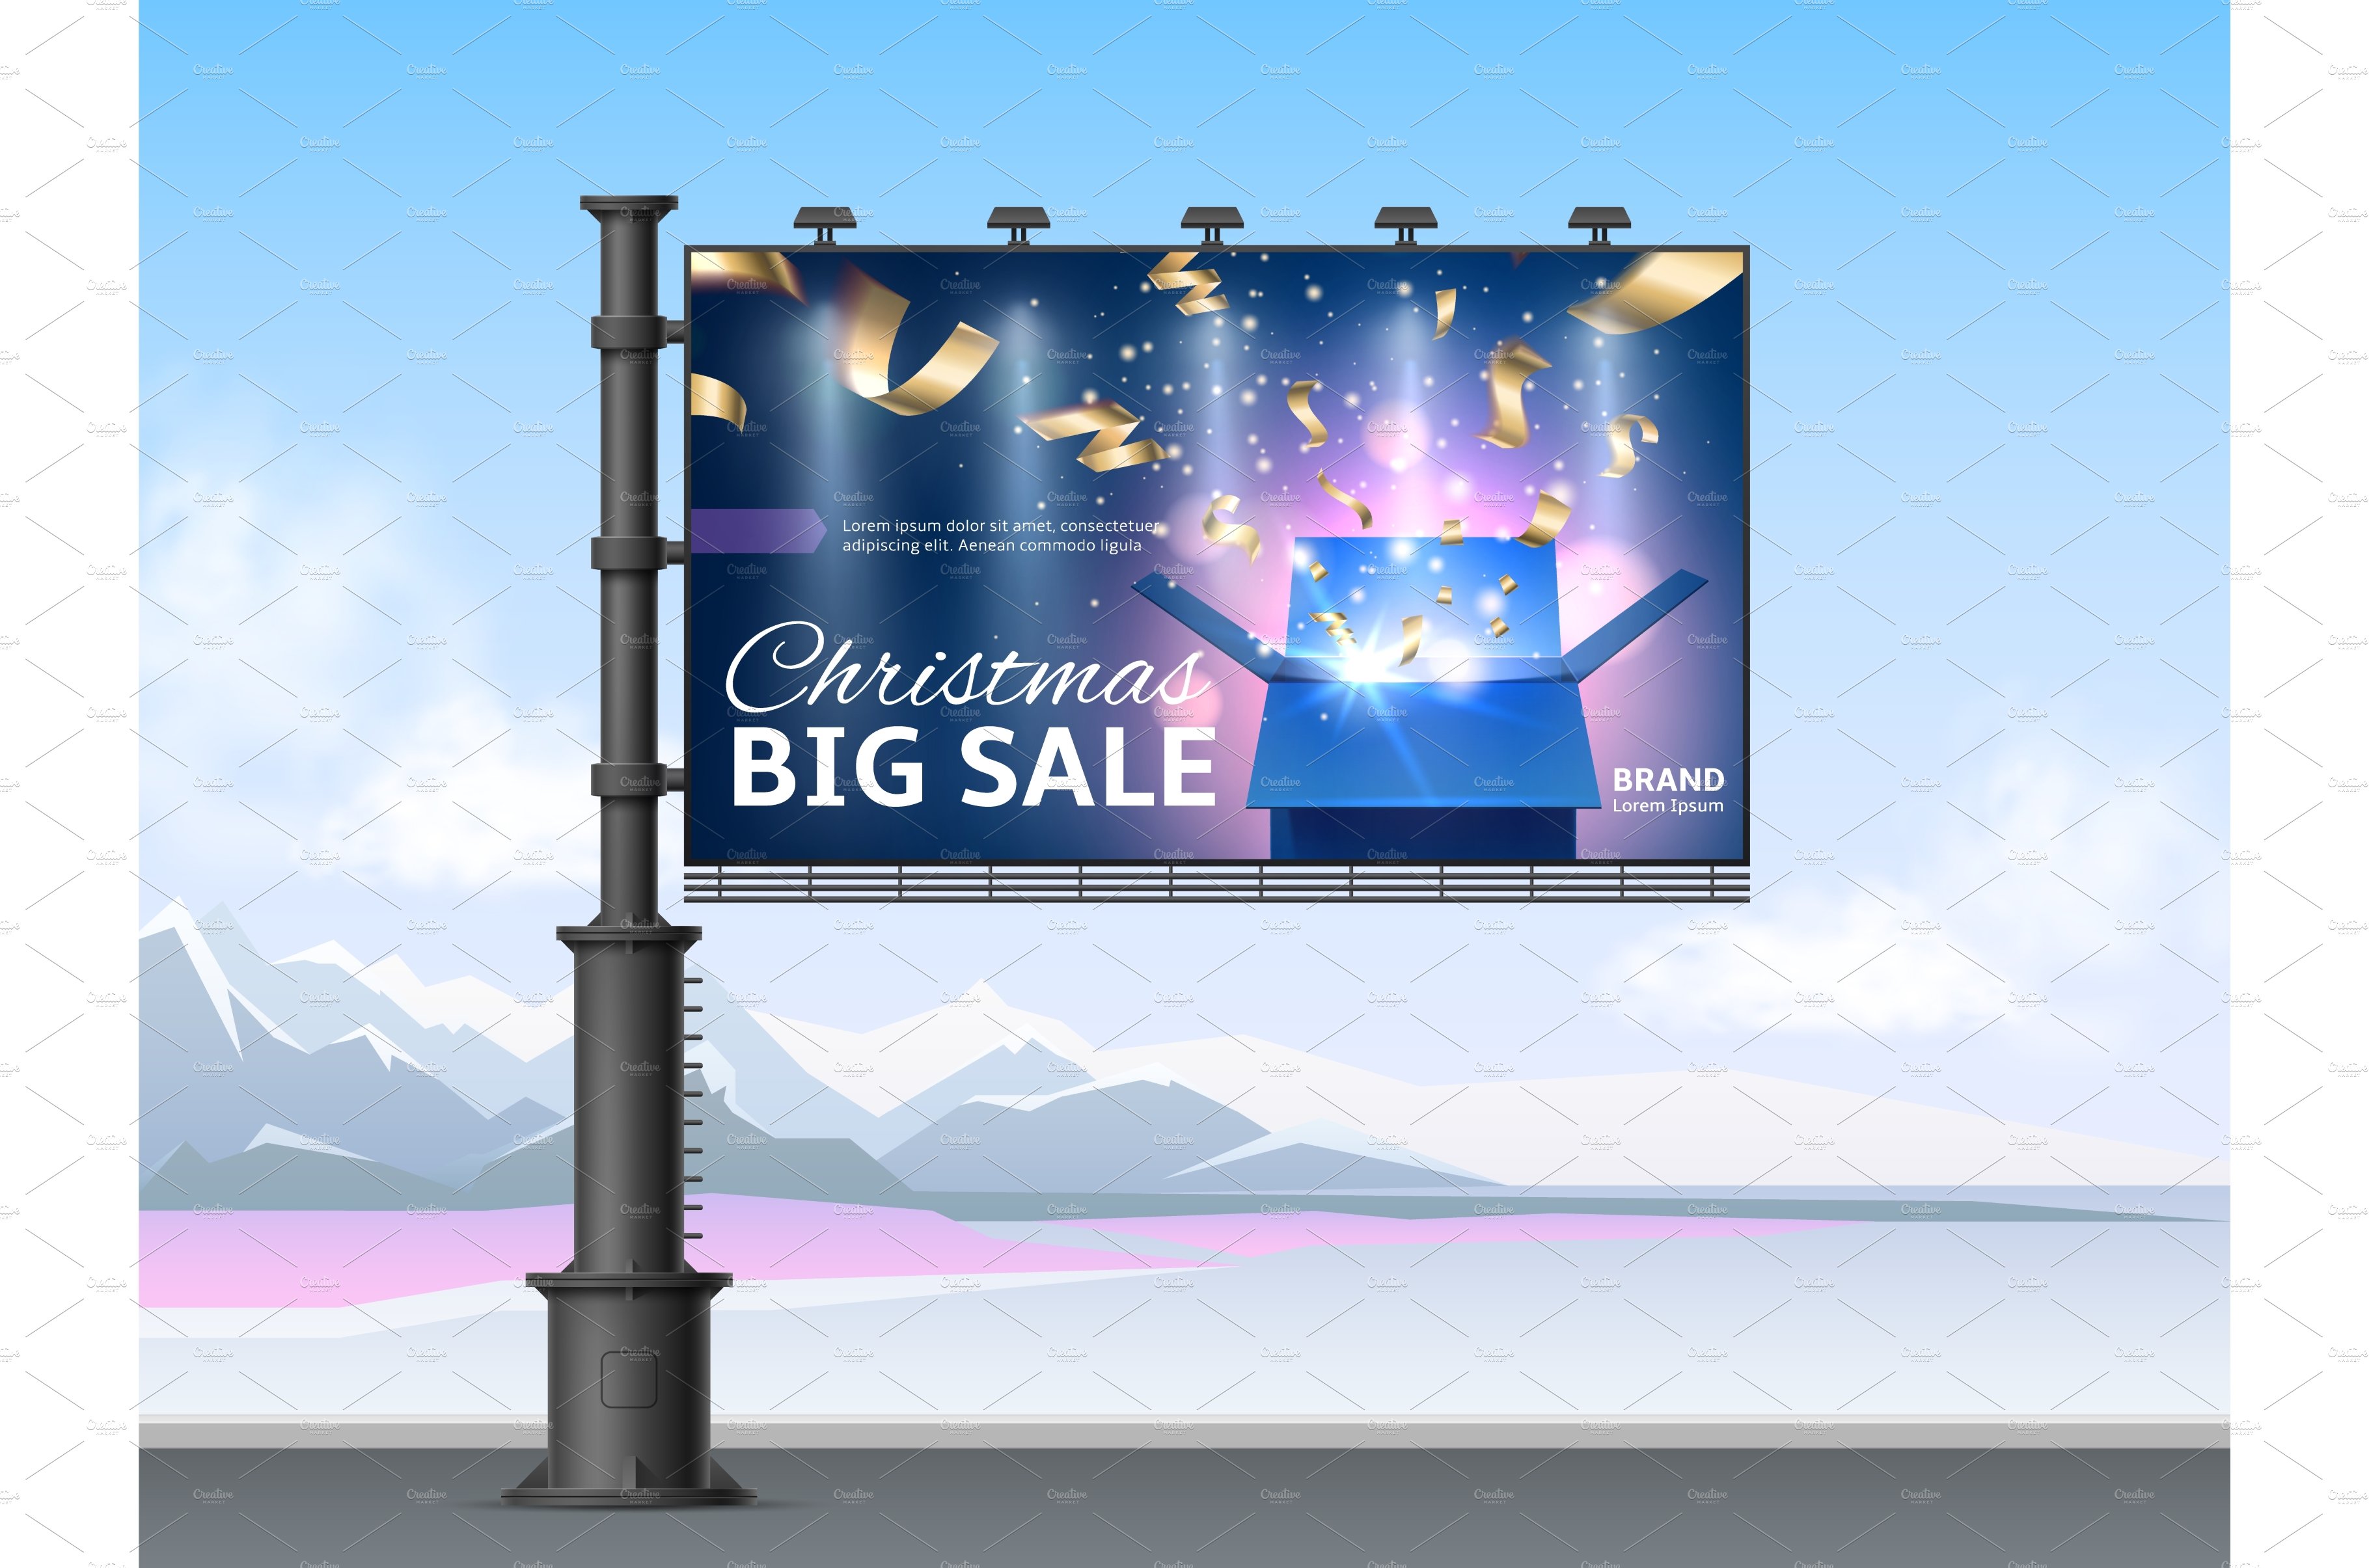 Realistic billboard advertisement cover image.